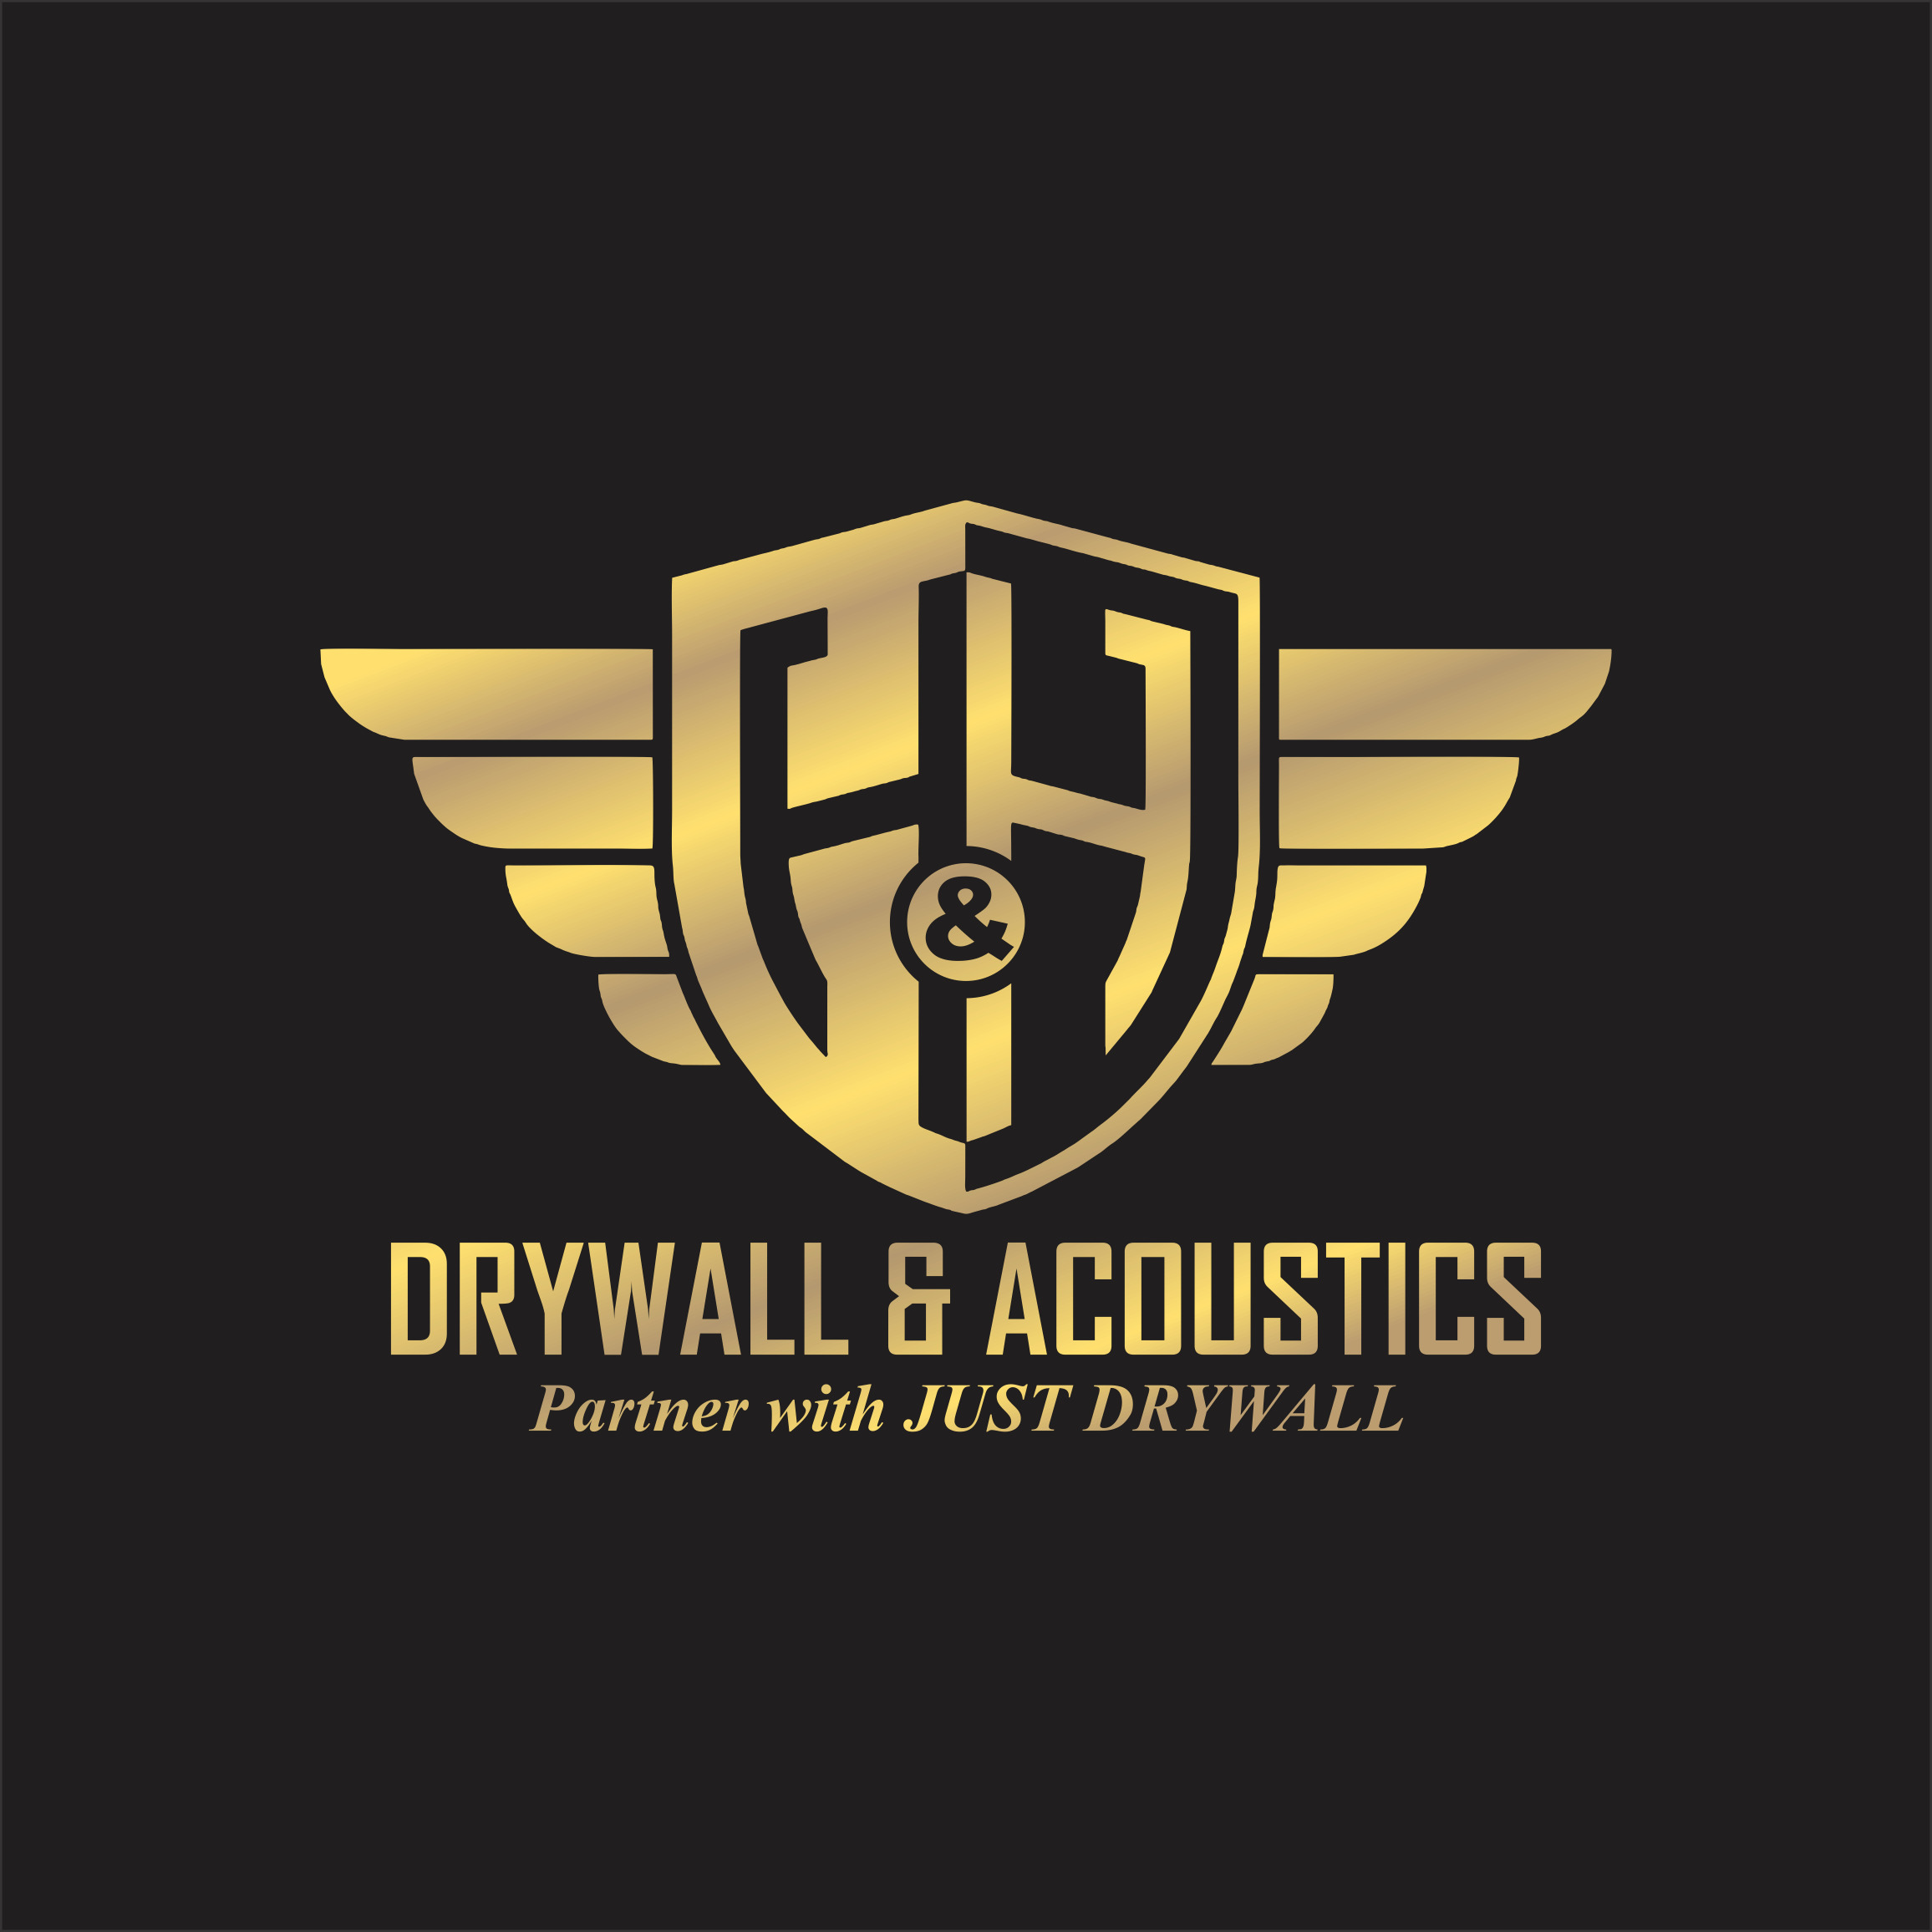 H&H Drywall & Acoustics's logo